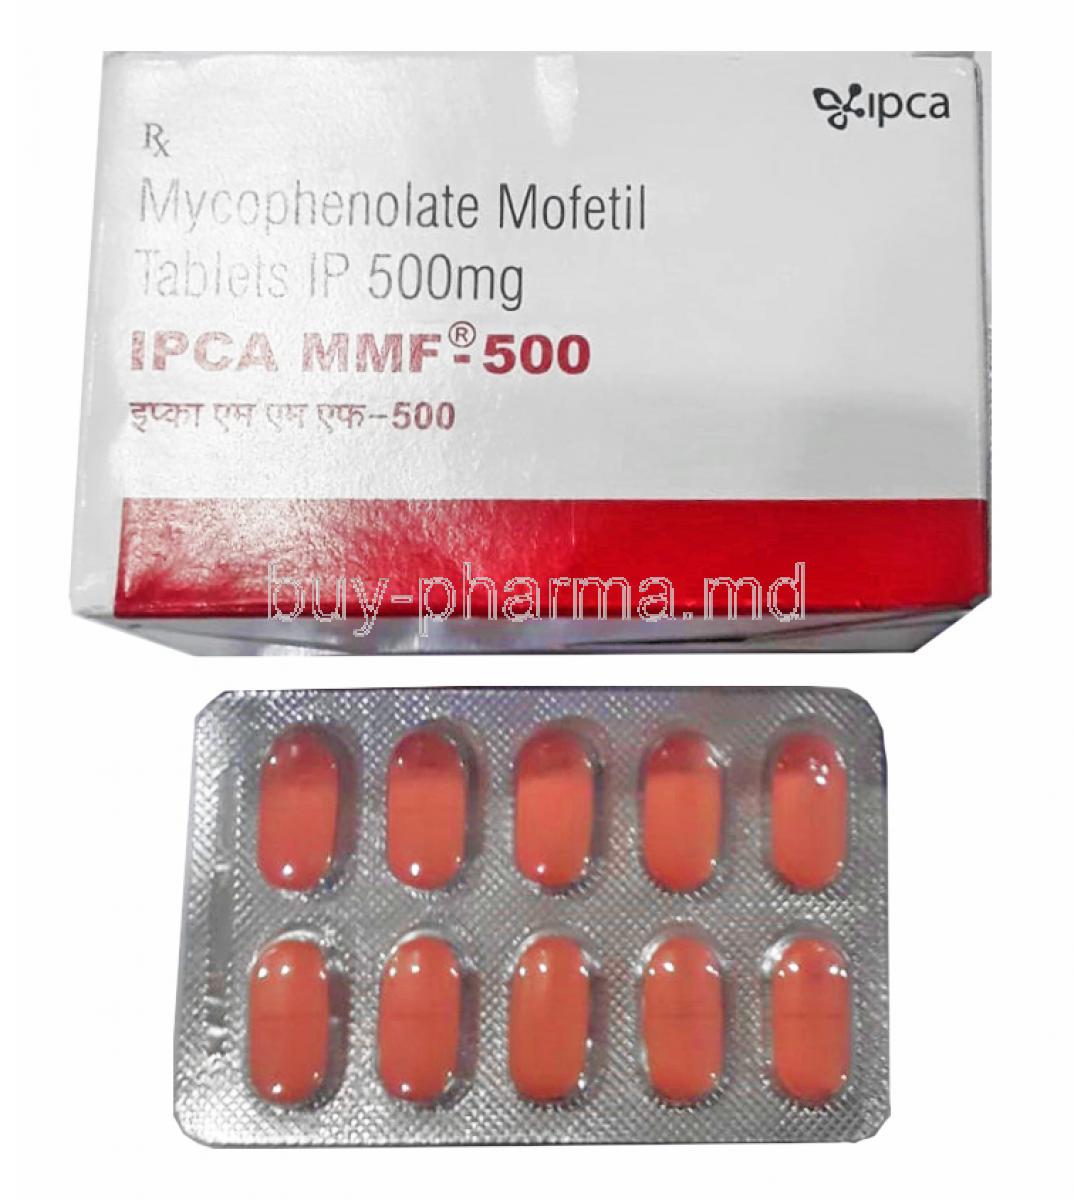 MMF, Mycophenolate mofetil 500mg box and tablet